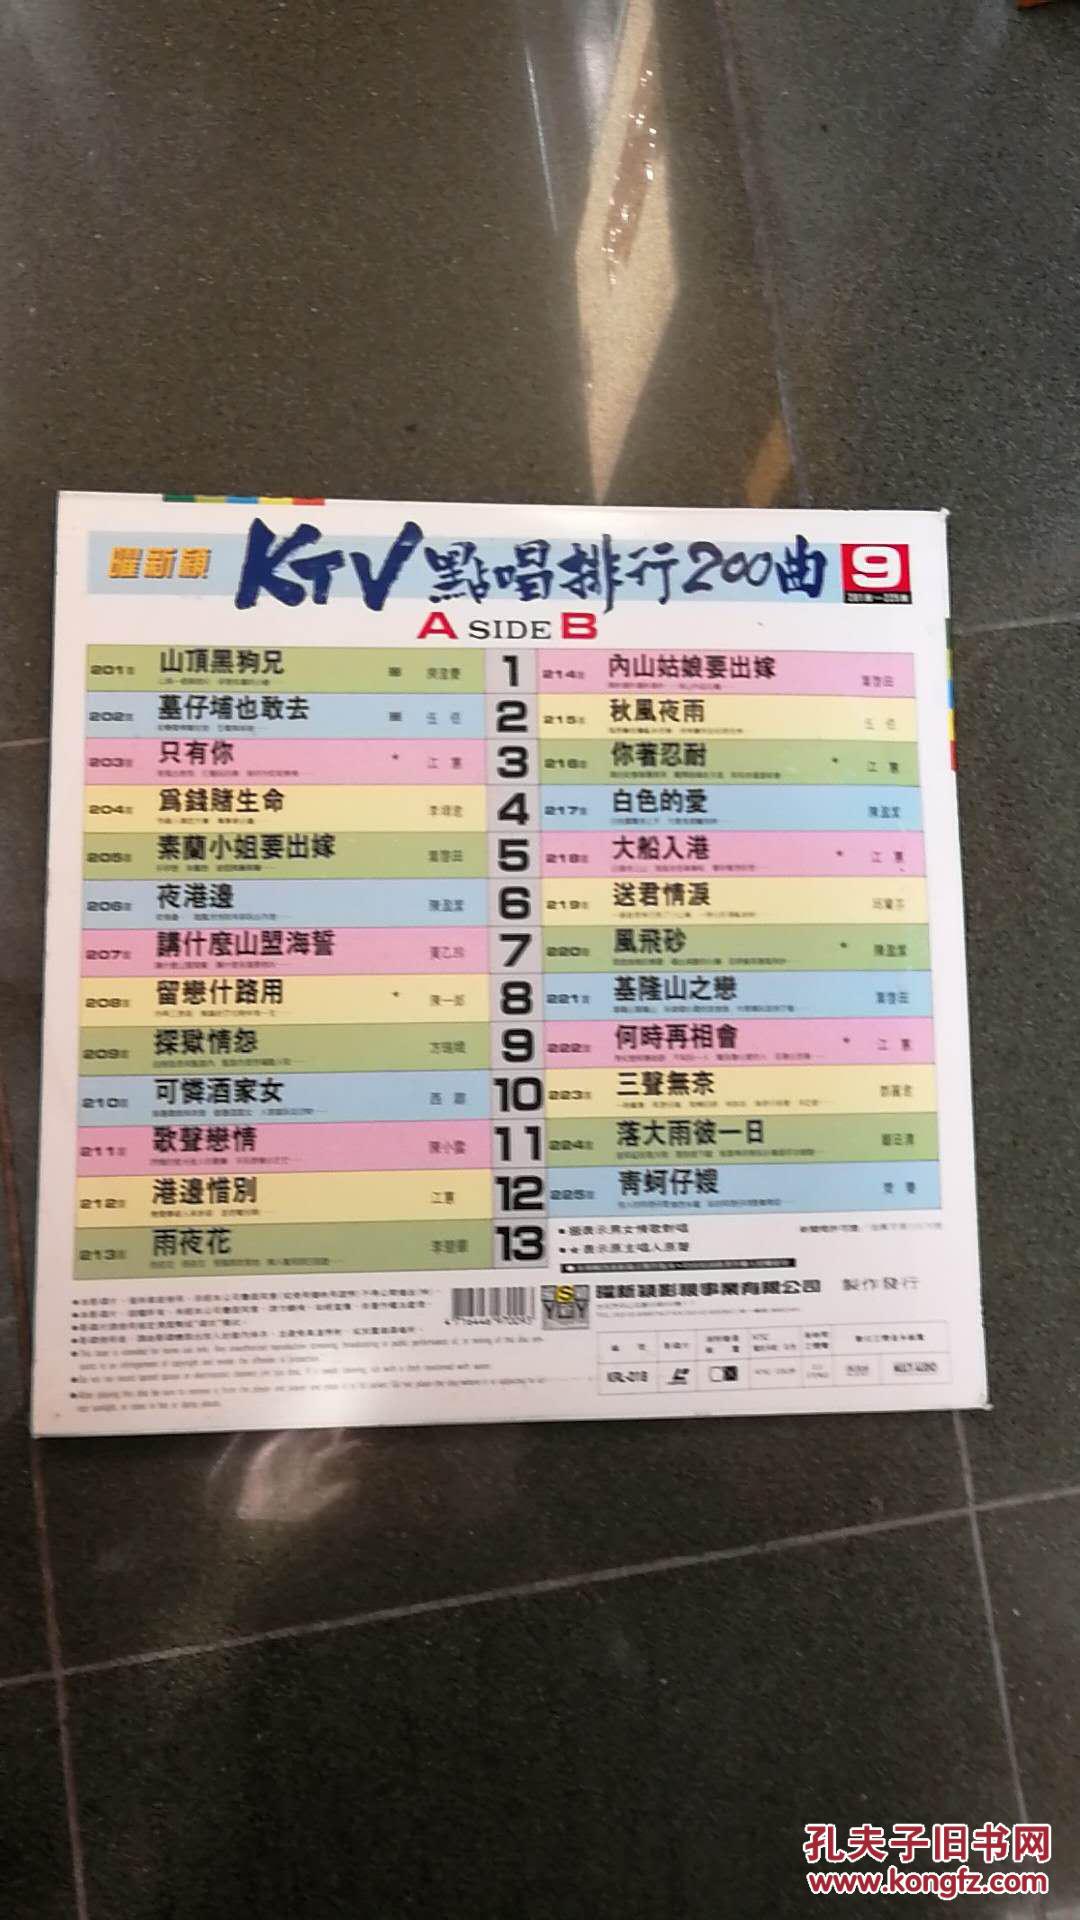 2019ktv点唱排行榜_KTV排行榜